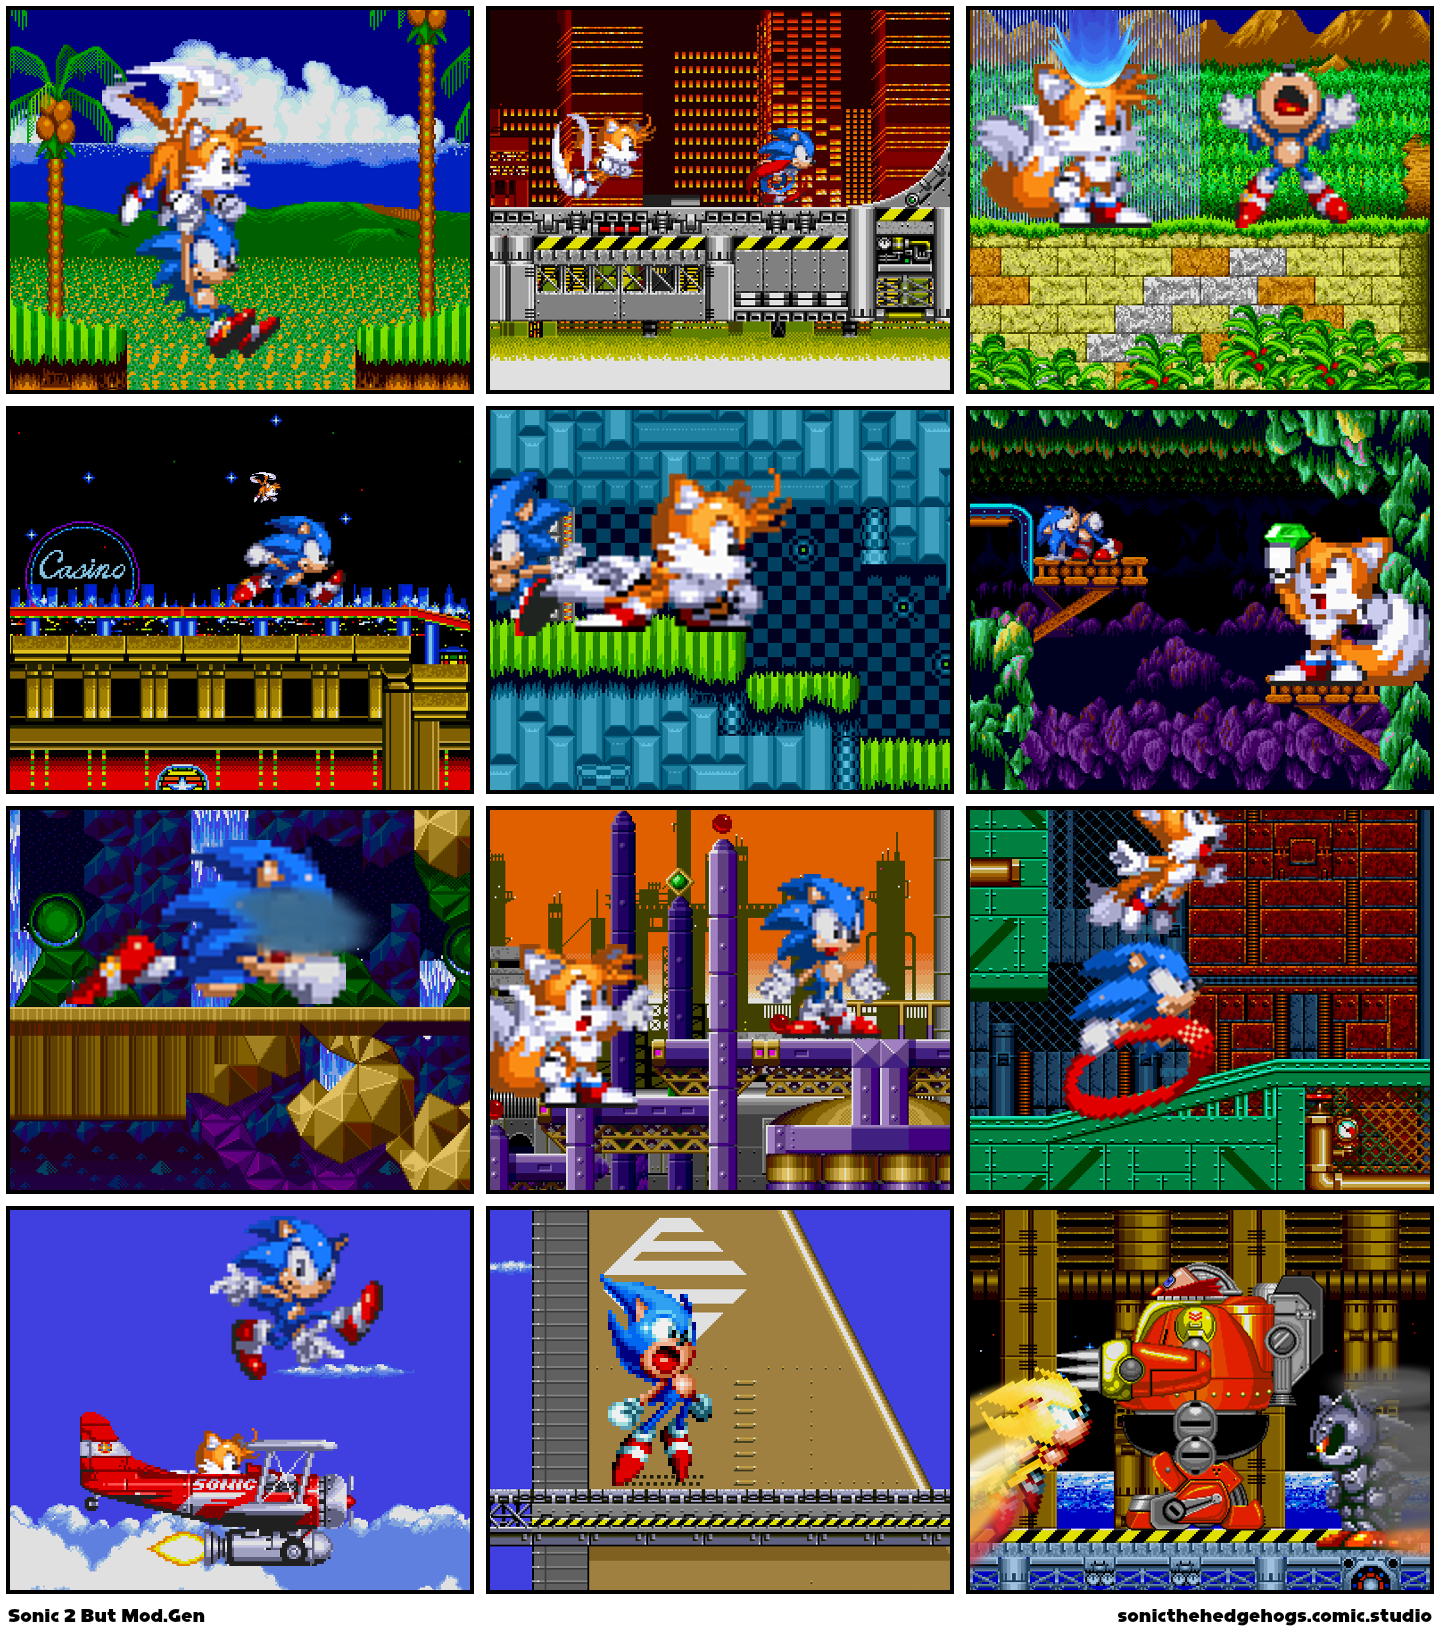 Sonic 2 But Mod.Gen